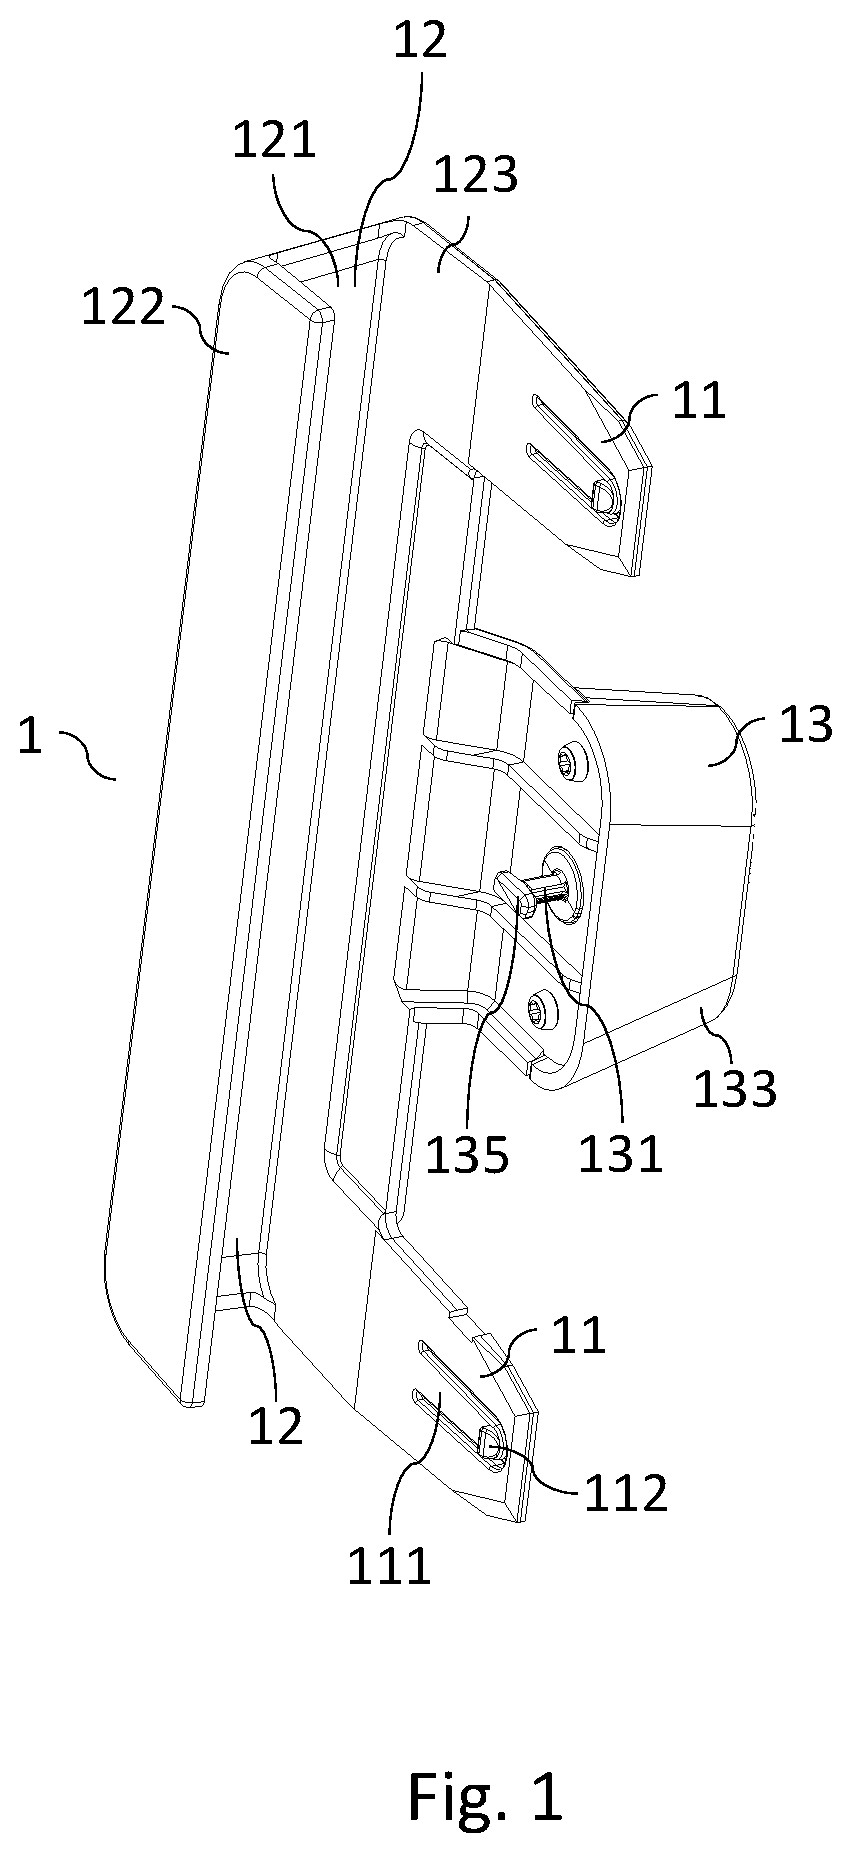 Locking bracket for locking a digital device into a casing